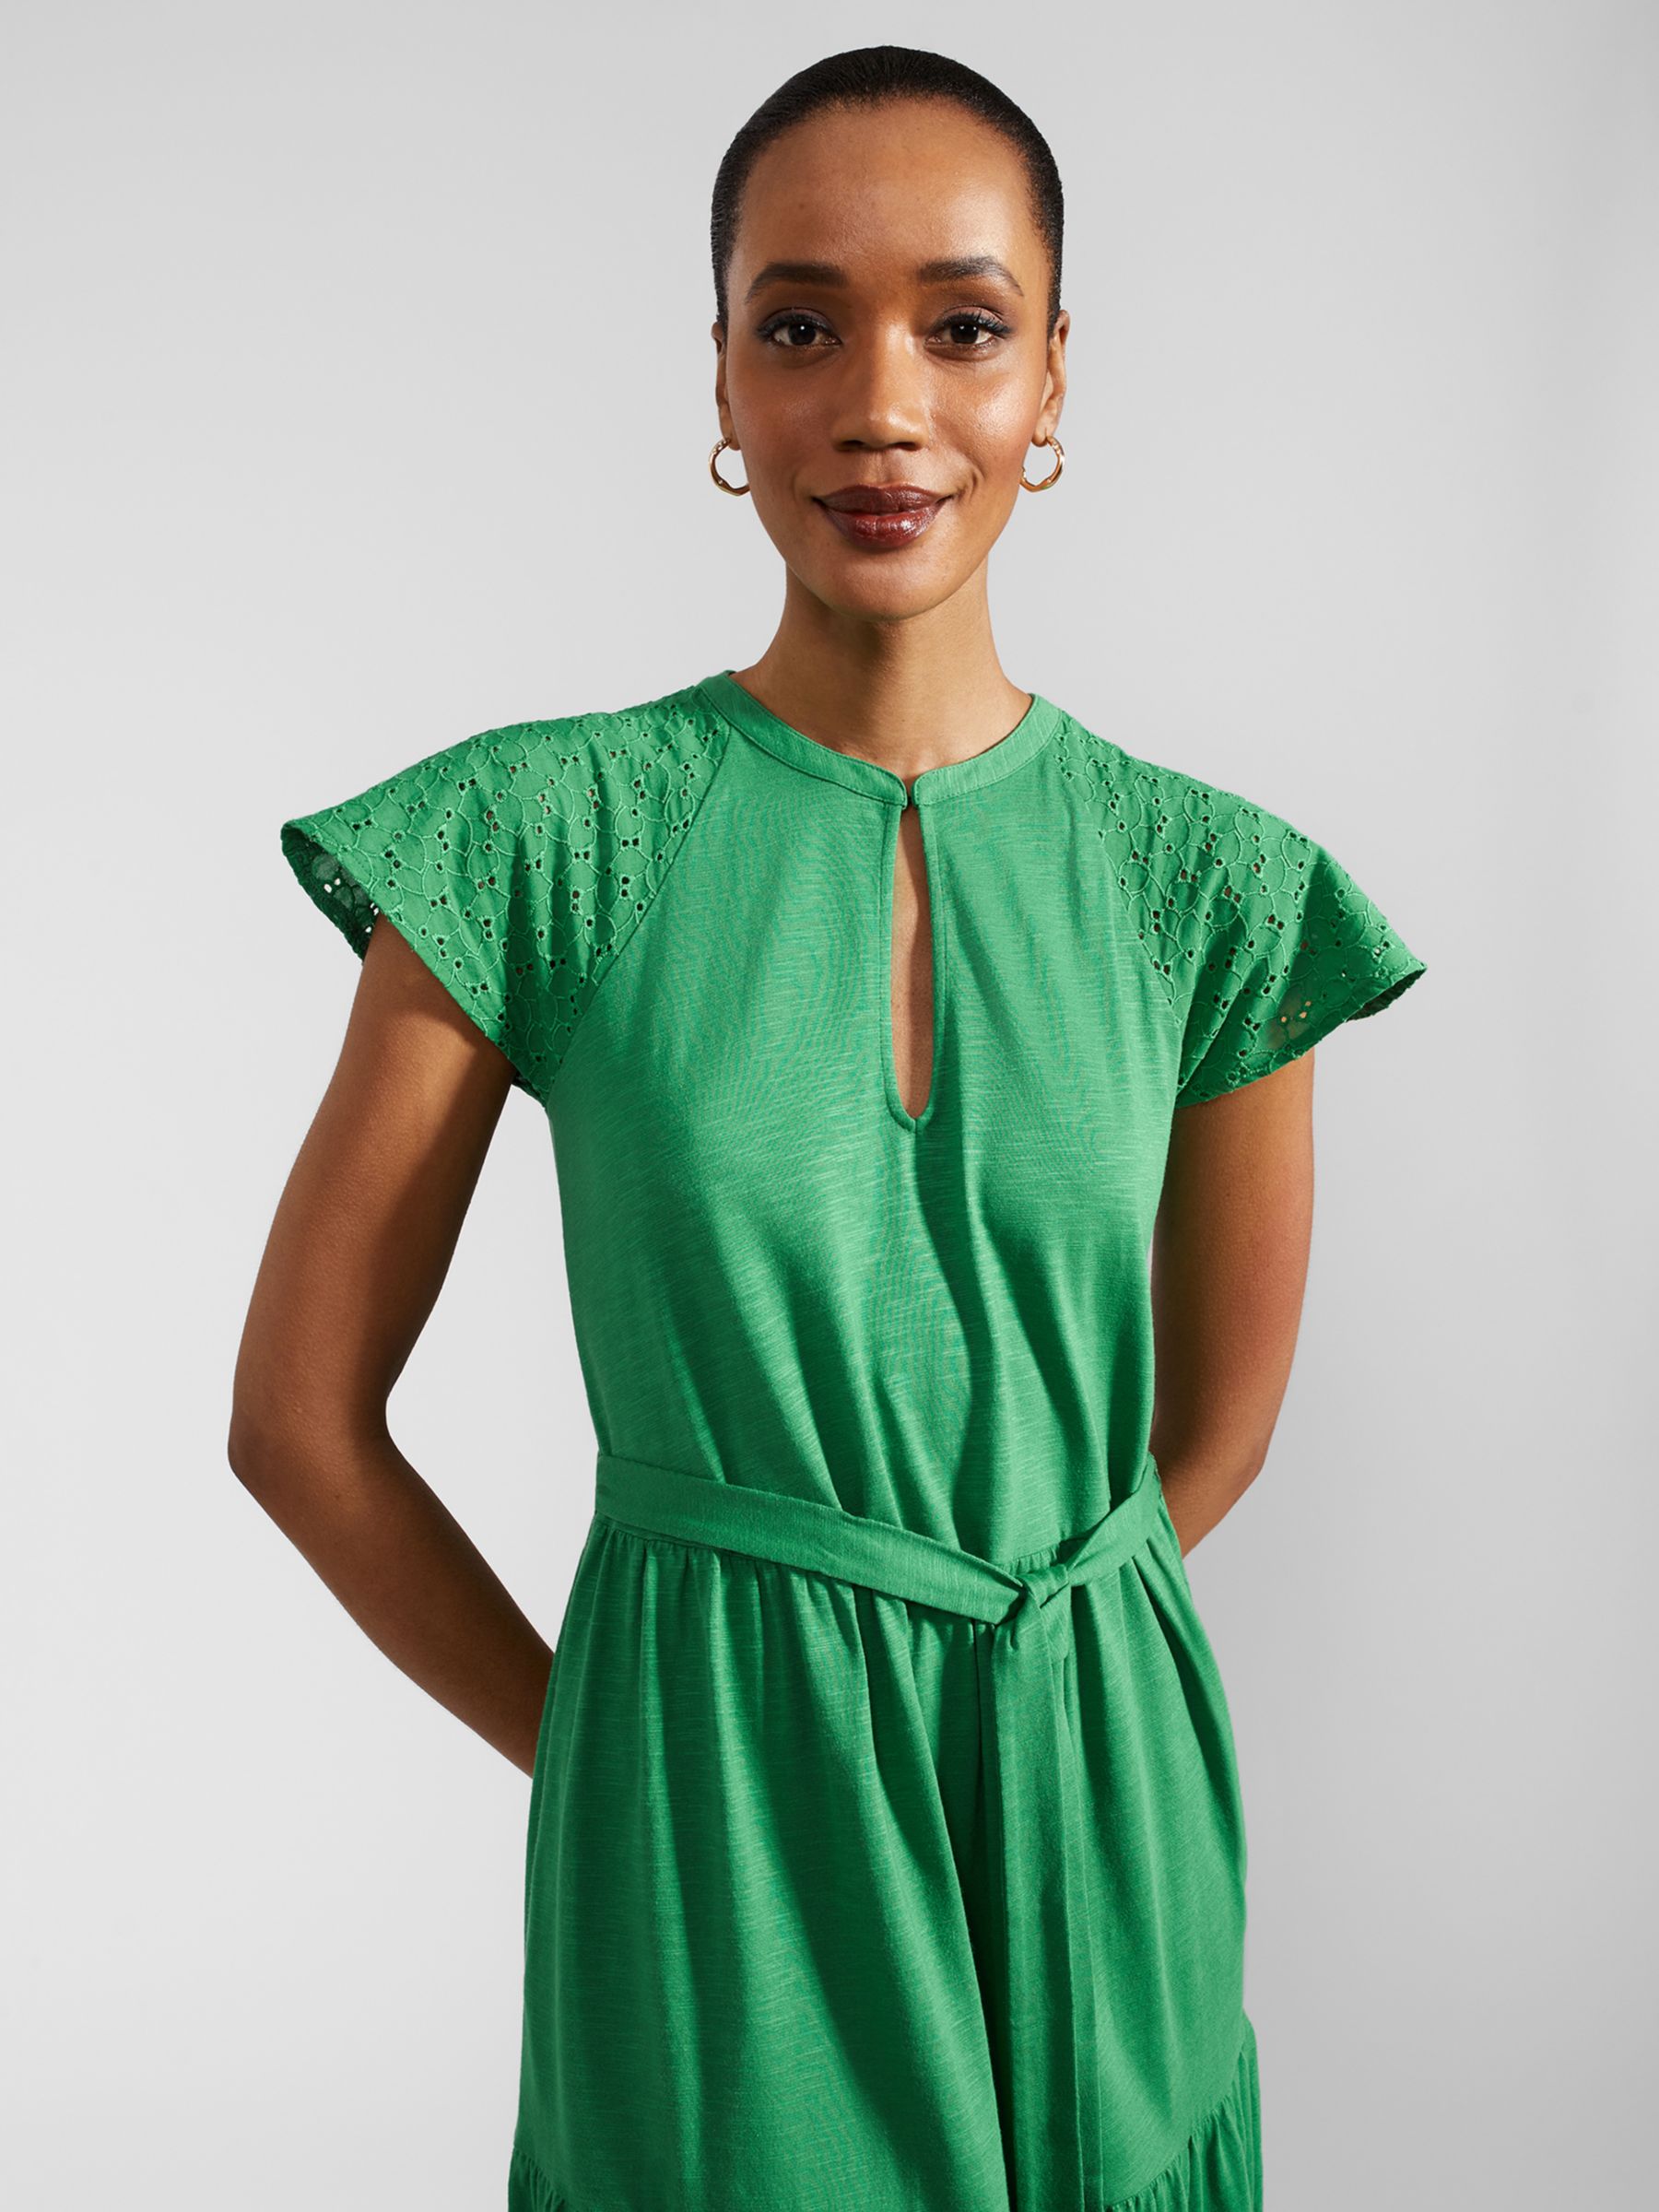 Hobbs Brodie Midi Jersey Dress, Green, 12